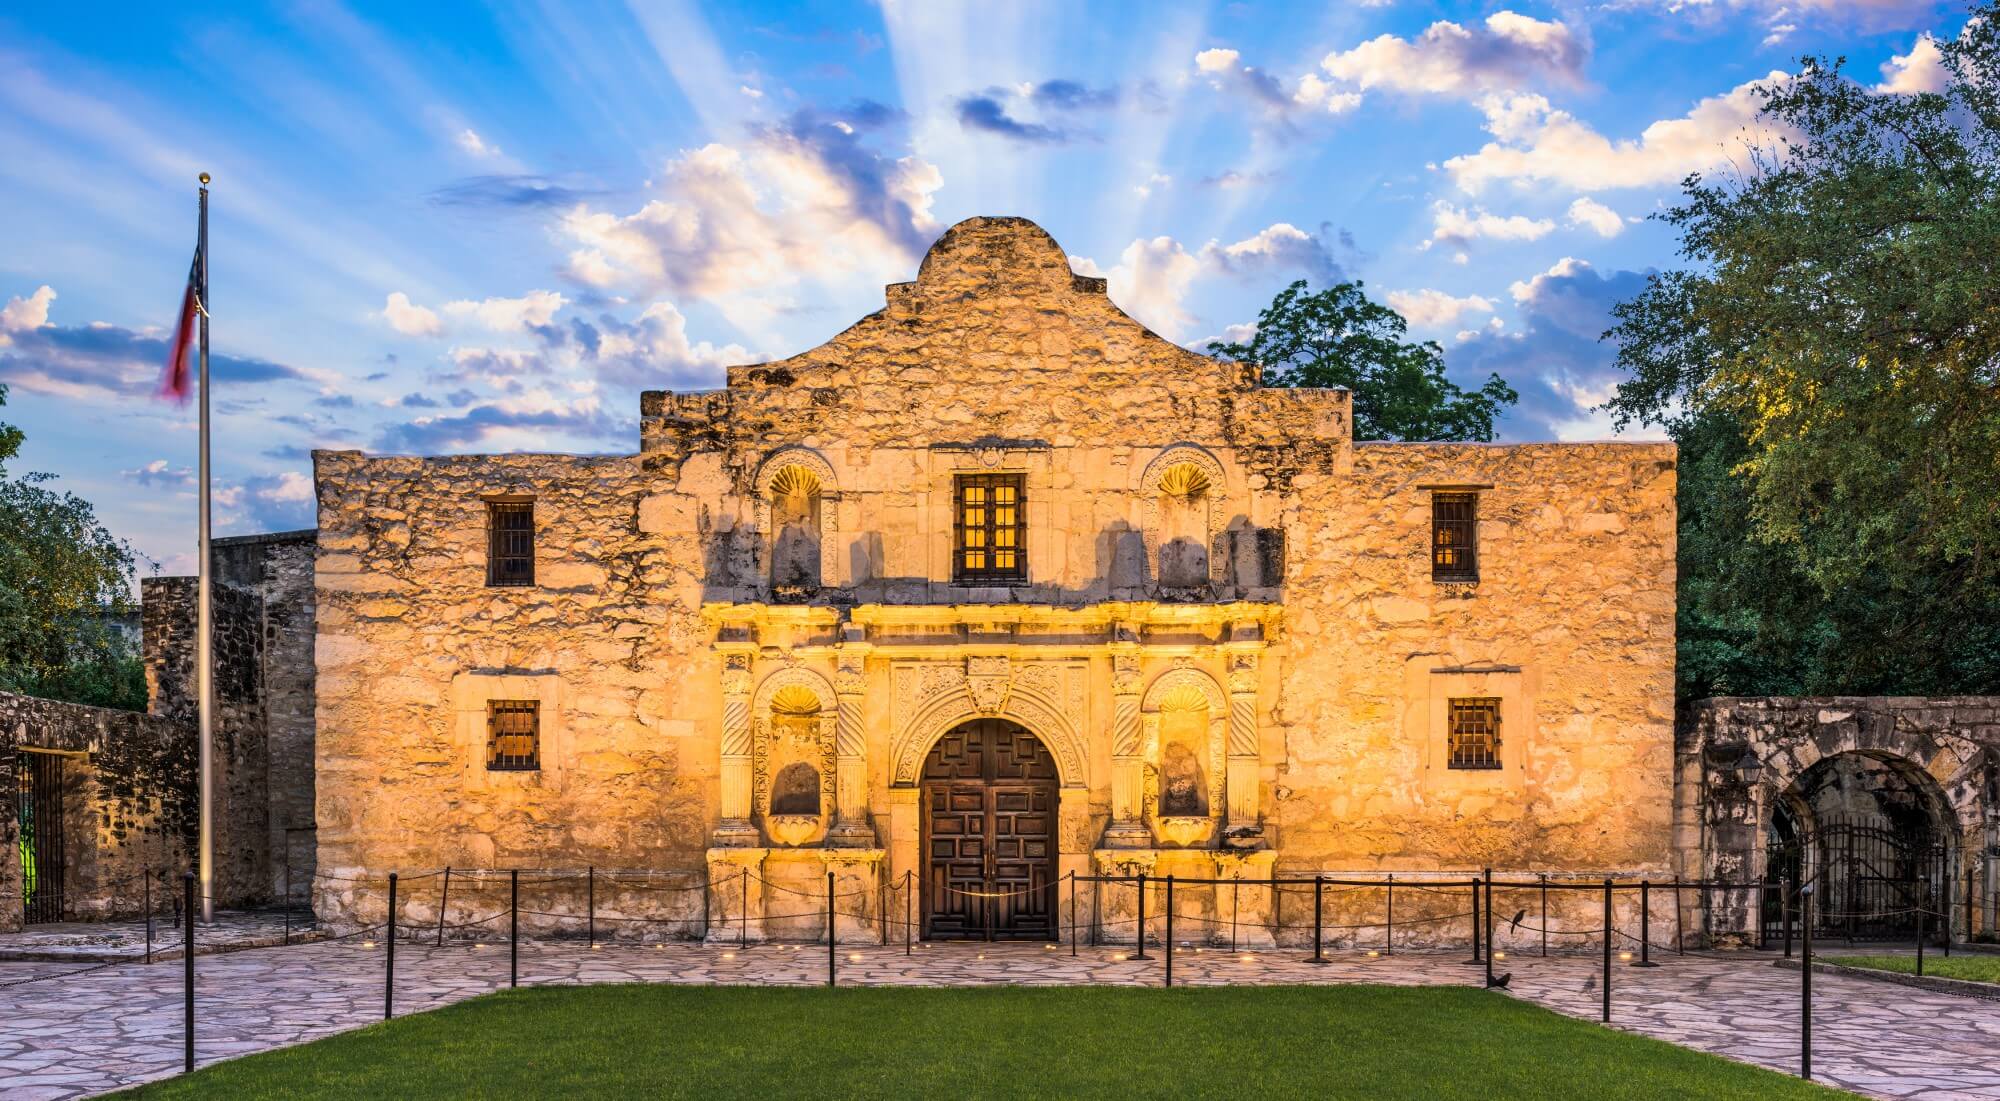 Entrance at The Alamo San Antonio Texas